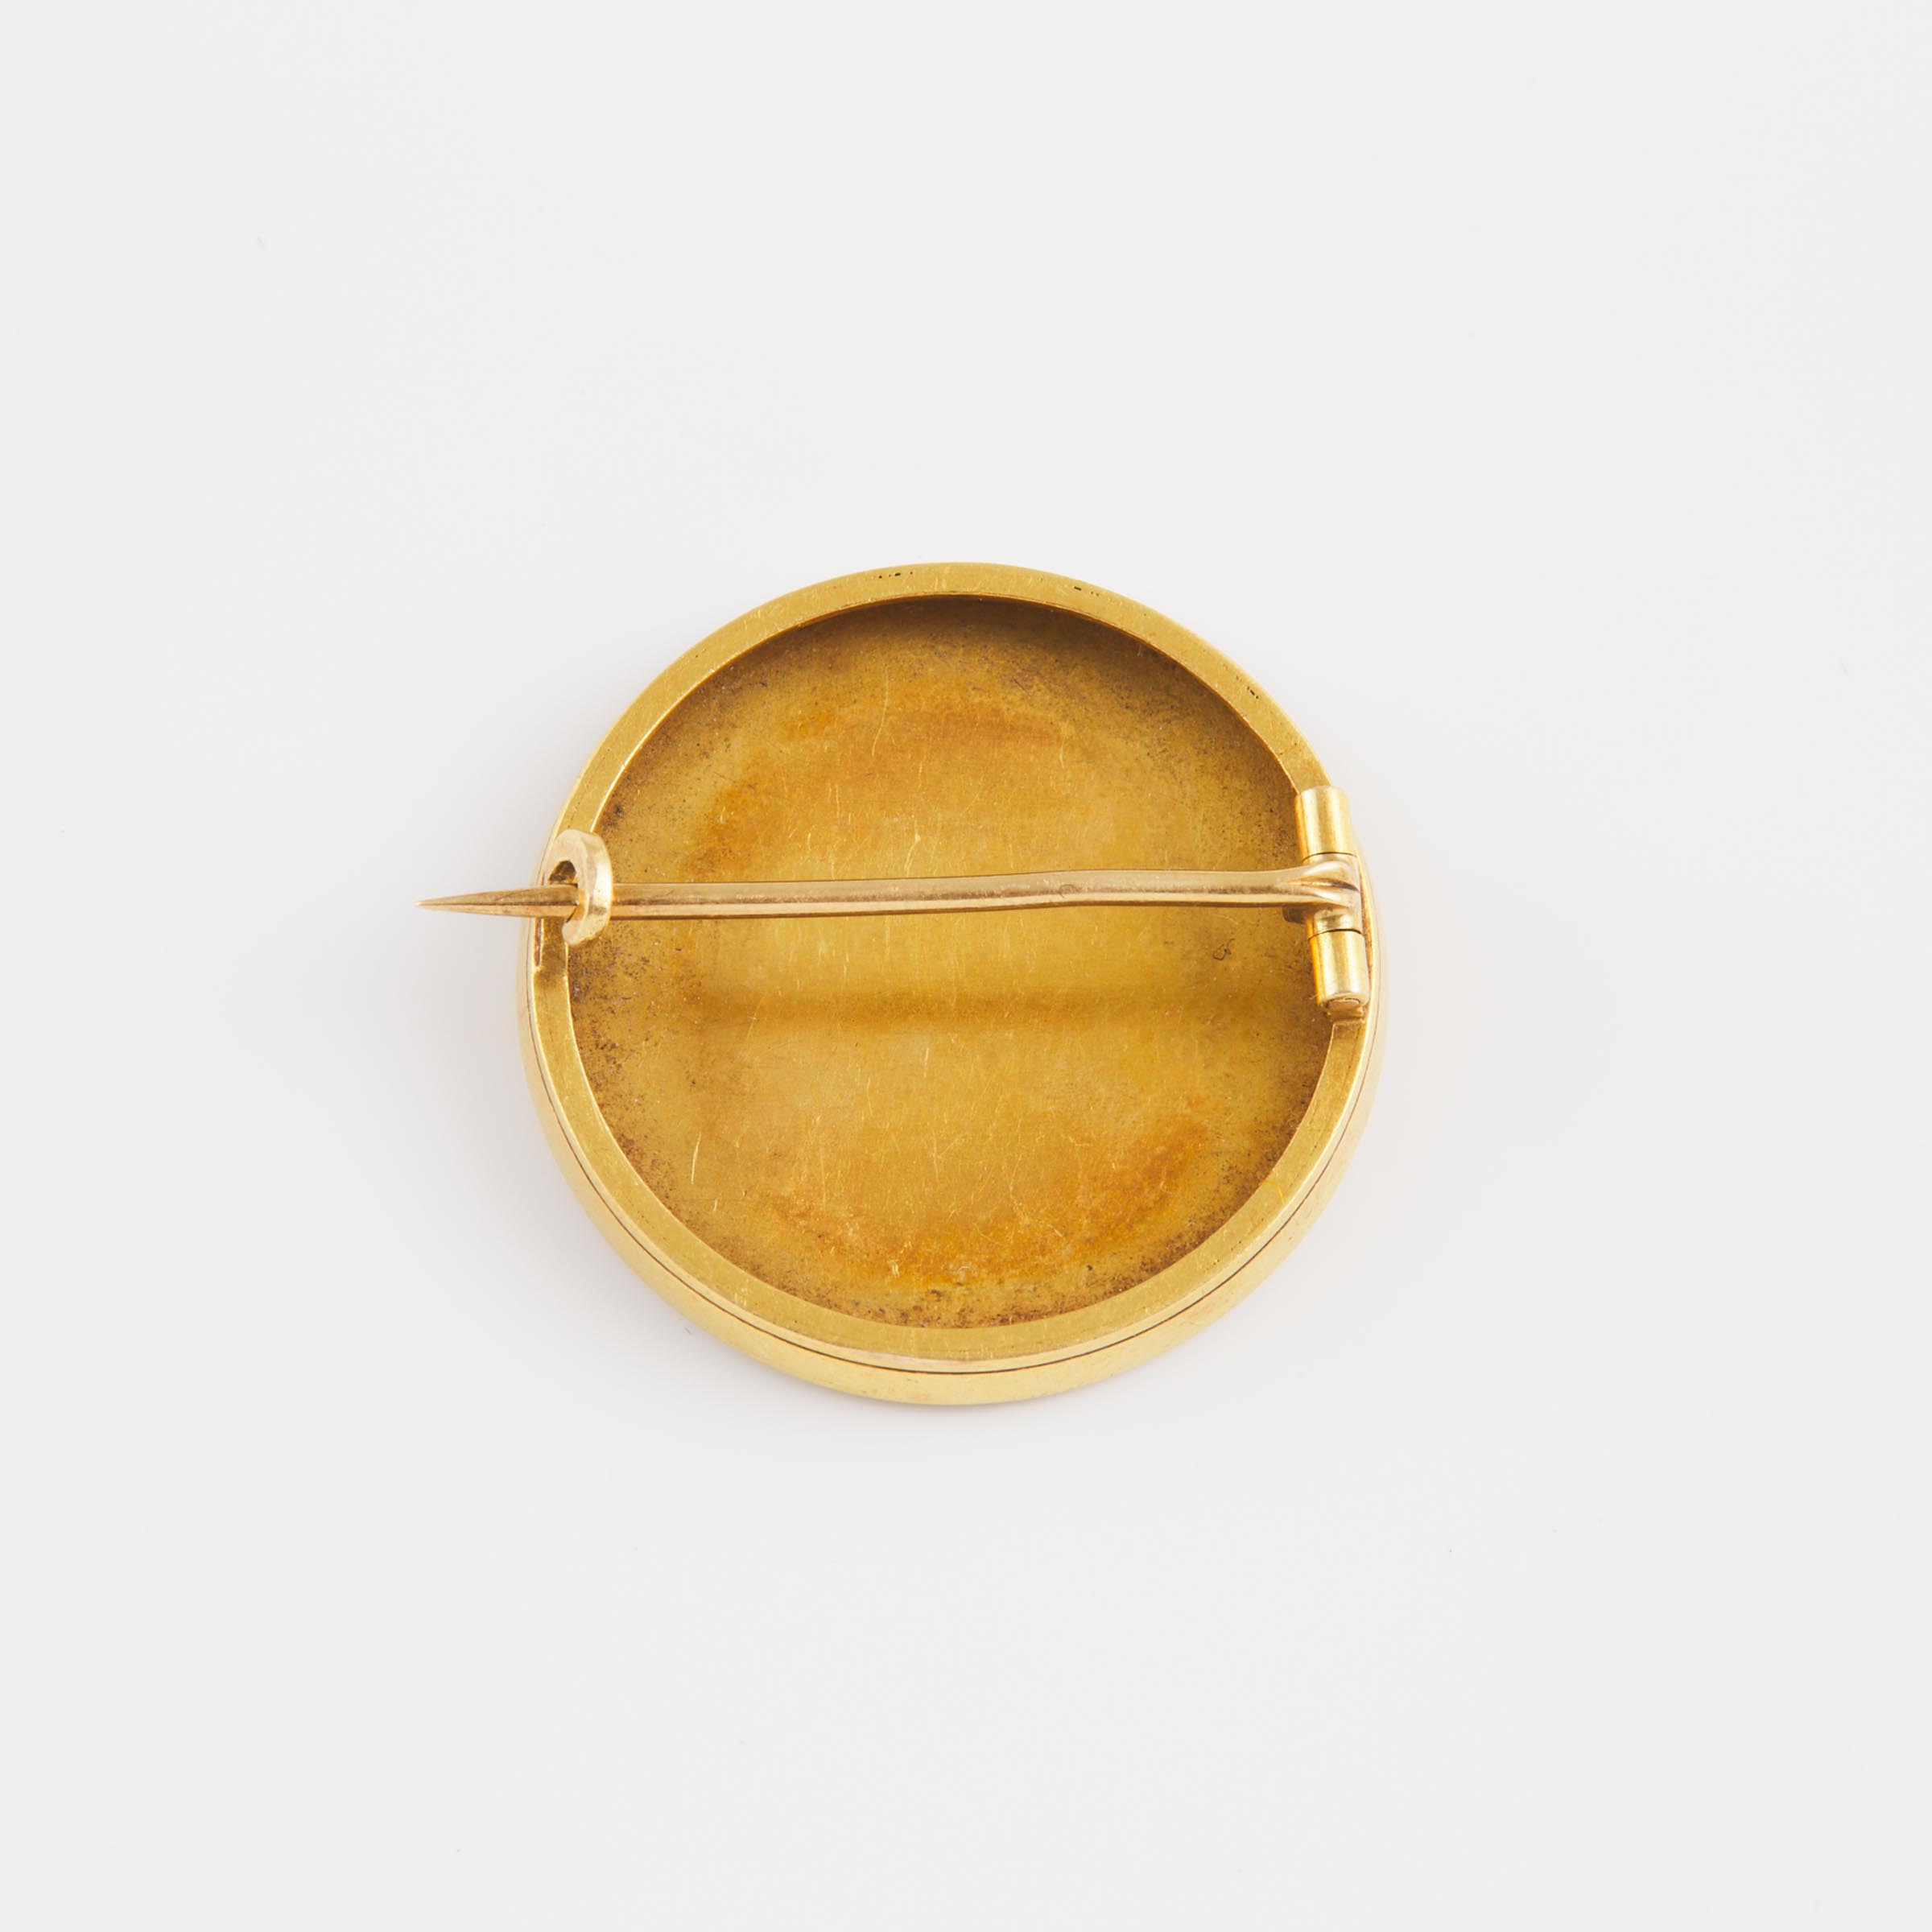 19th Century 18k Yellow Gold And Enamel Circular Pin